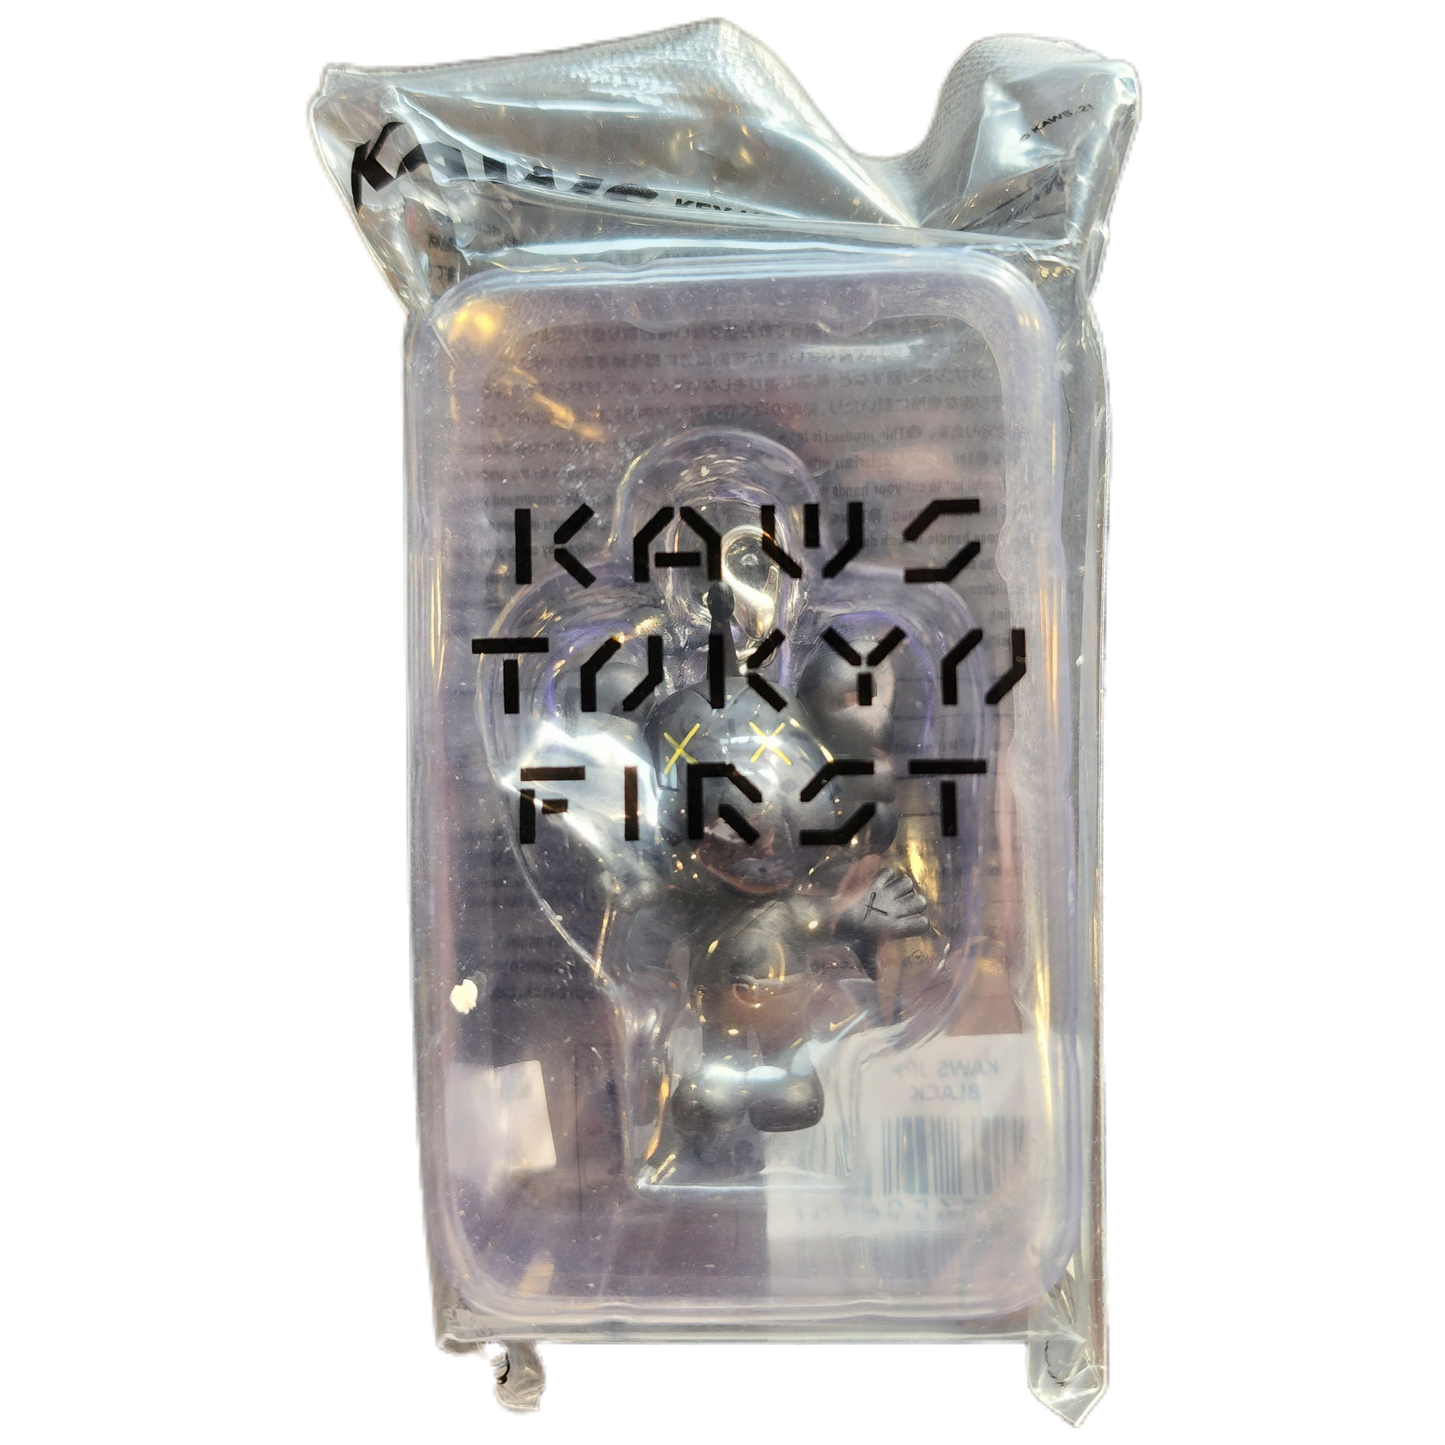 Kaws - "Tokyo First JPP" - Keychain